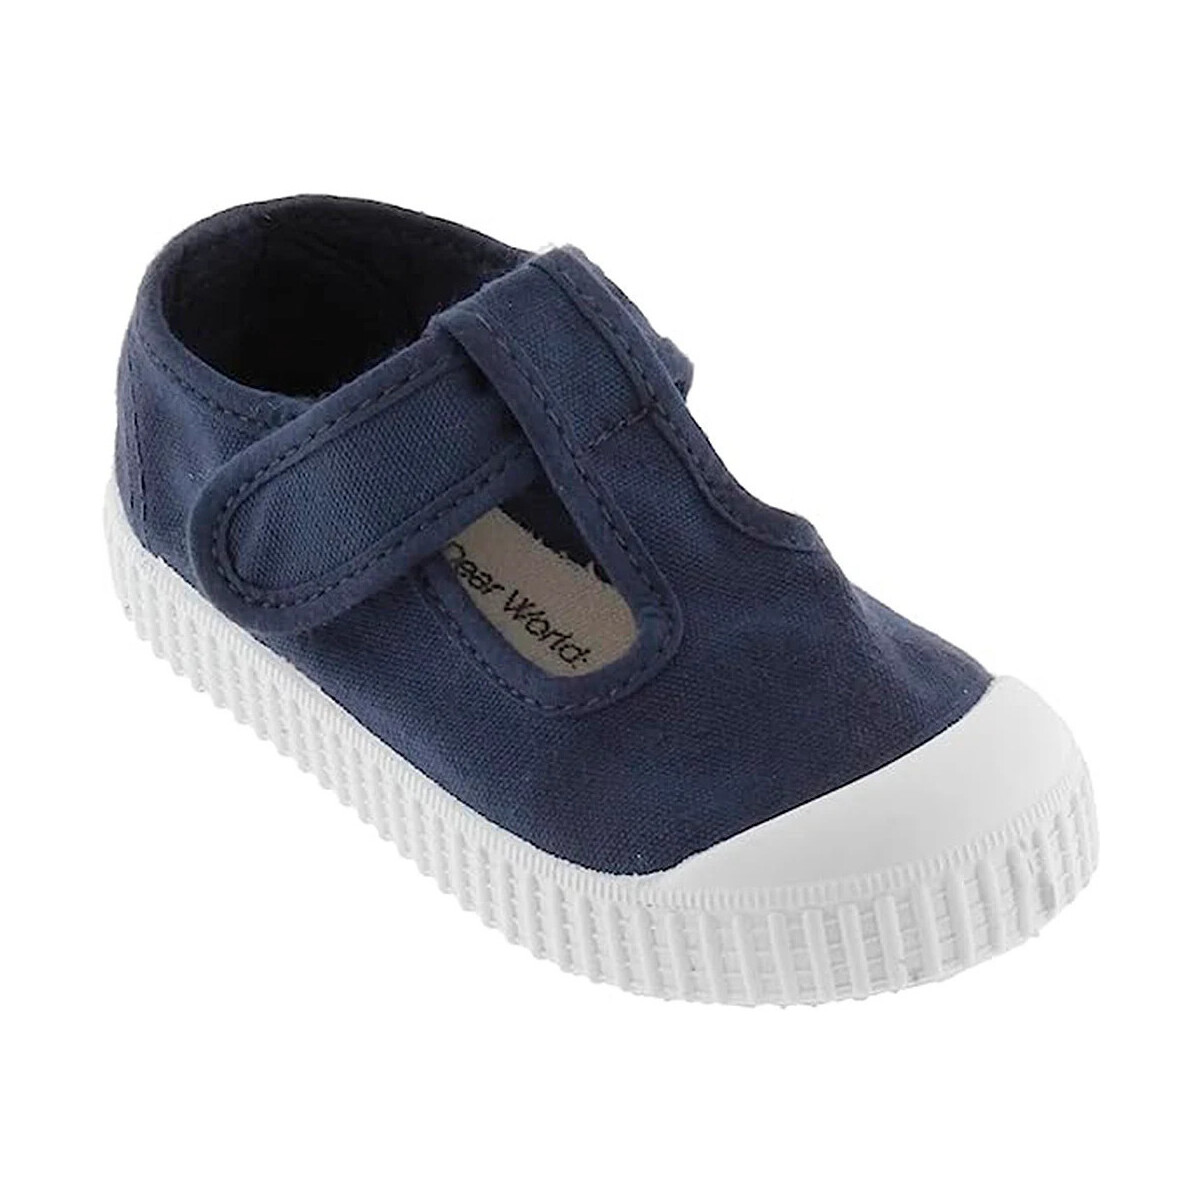 Schuhe Kinder Sandalen / Sandaletten Victoria SANDALEN  136625 CANVAS Blau